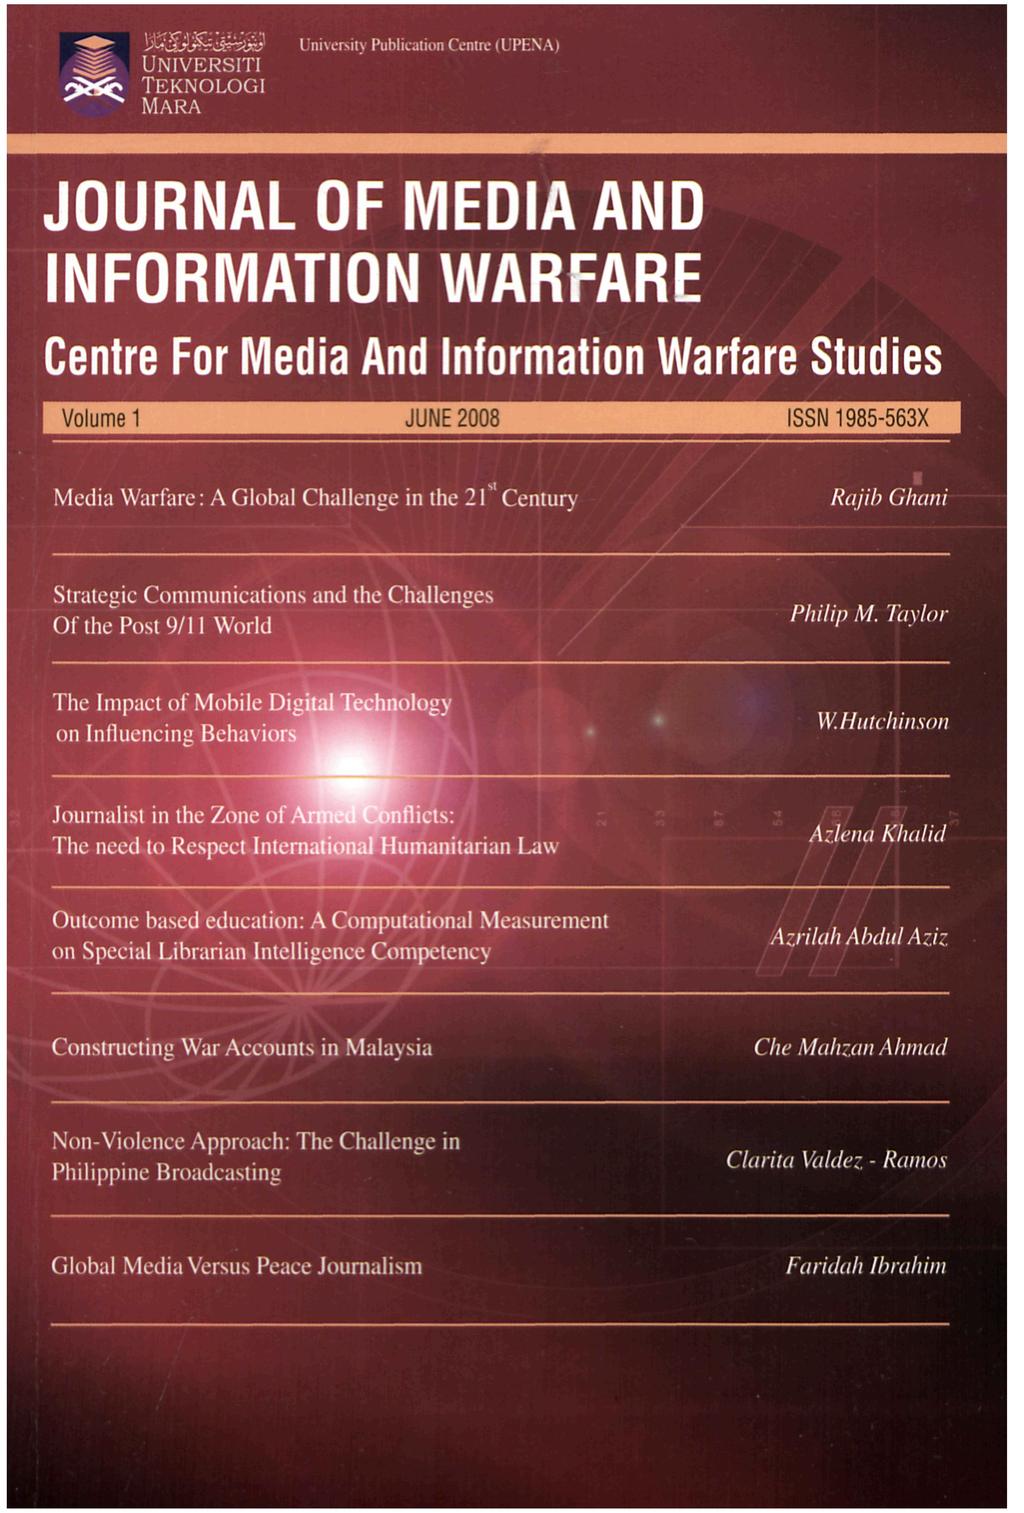 Mt\ Publication Cenire (L PI \ \, UNIVERSITI <&Bb TEKNOLOGI ^ ^ MARA JOURNAL OF MEDIA AND INFORMATION WARFARE Centre For Media And Information Warfare Studies Volume 1 JUNE 2008 Media Warfare: A